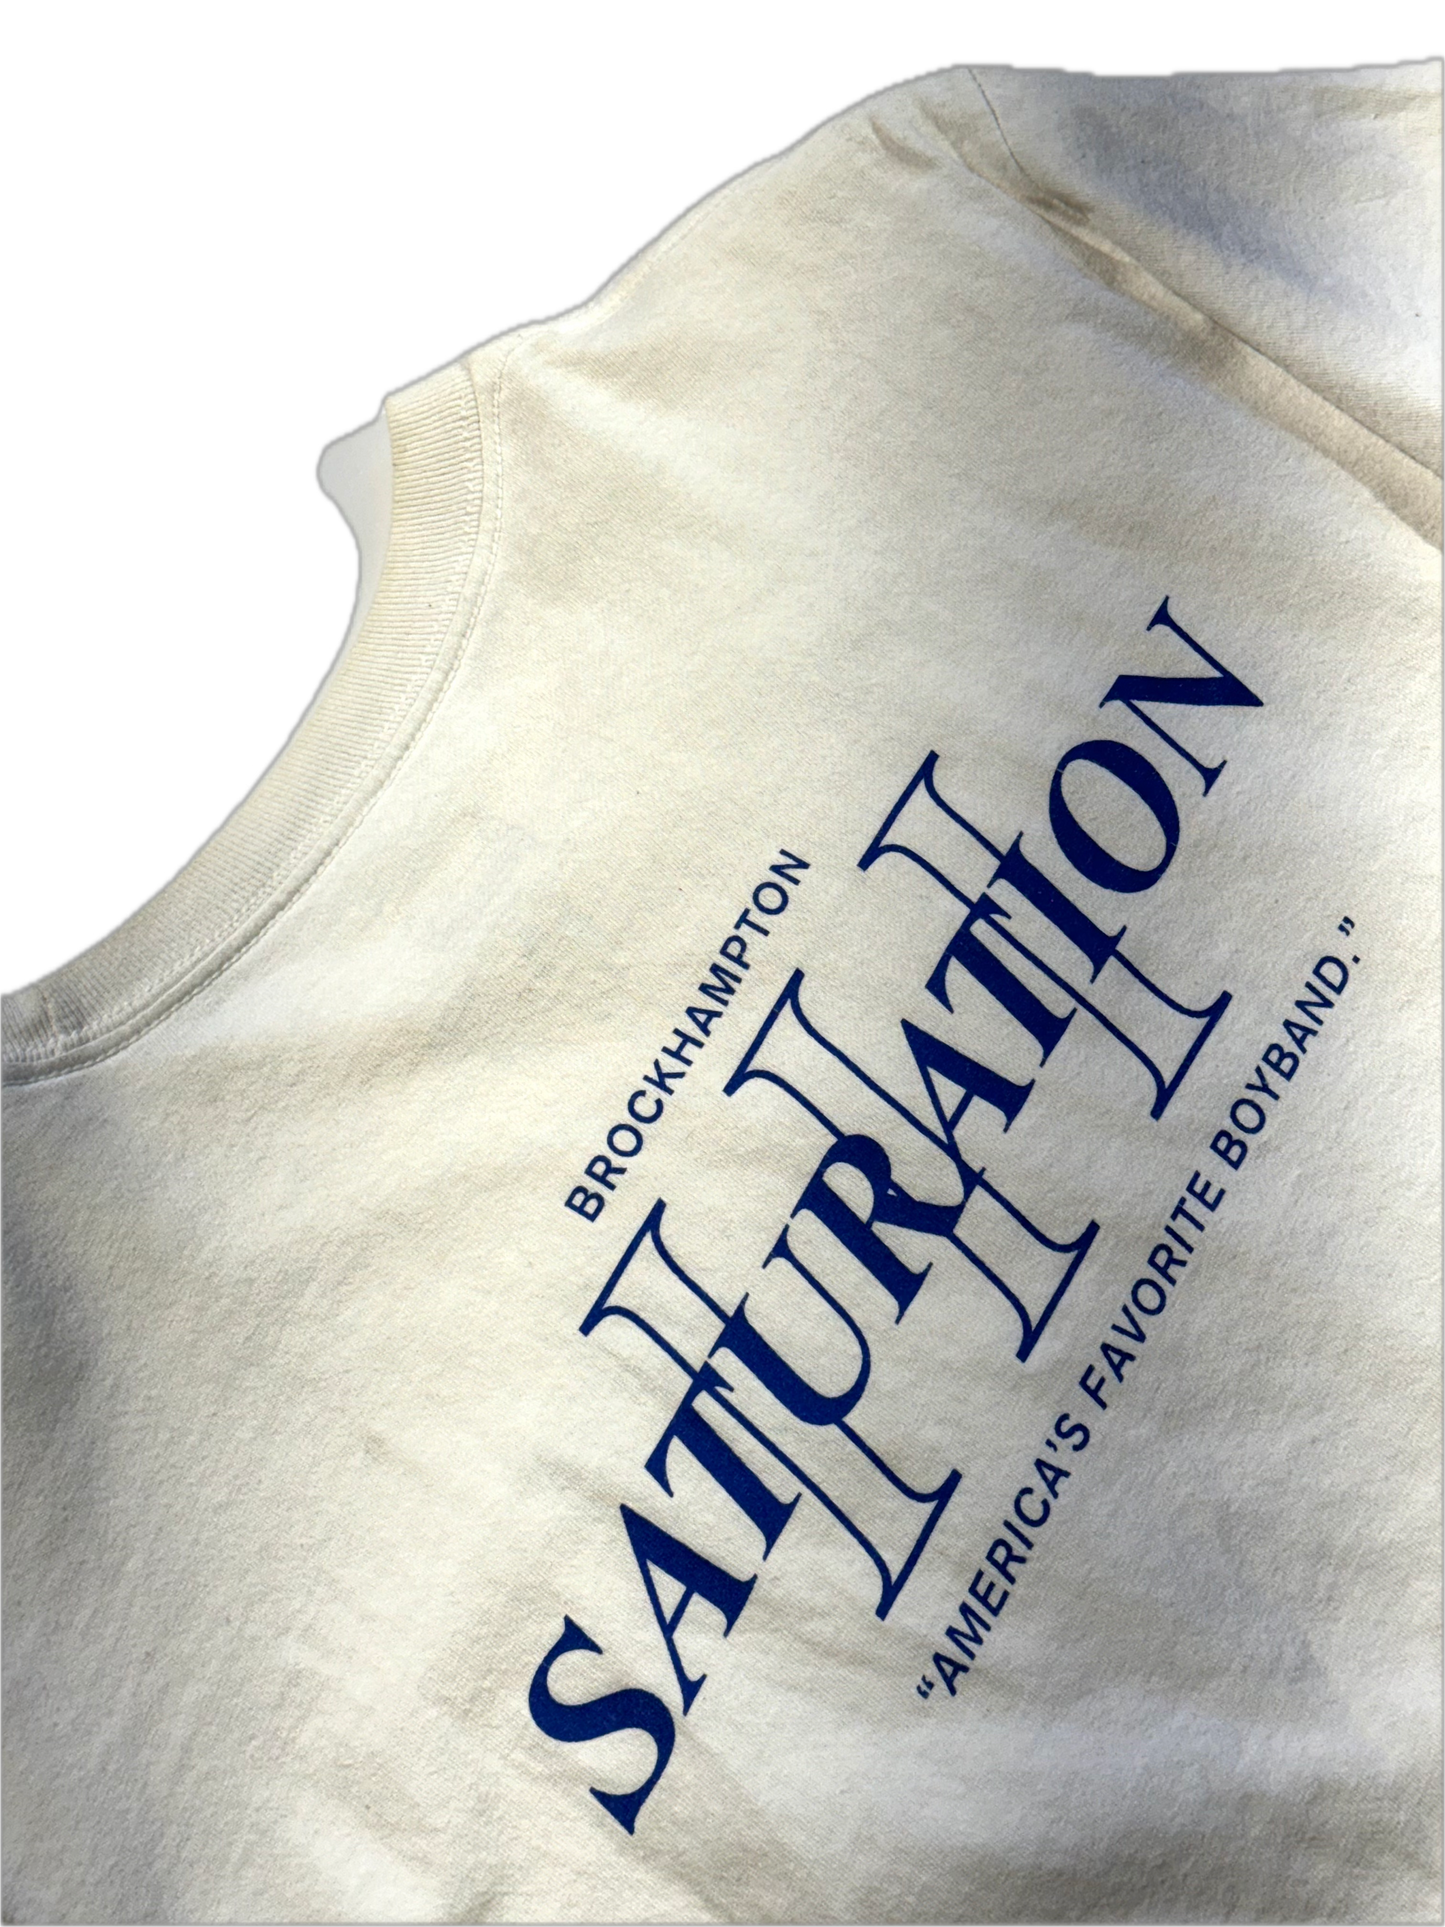 Vintage Brockhampton T-Shirt Band Tee Saturation 3